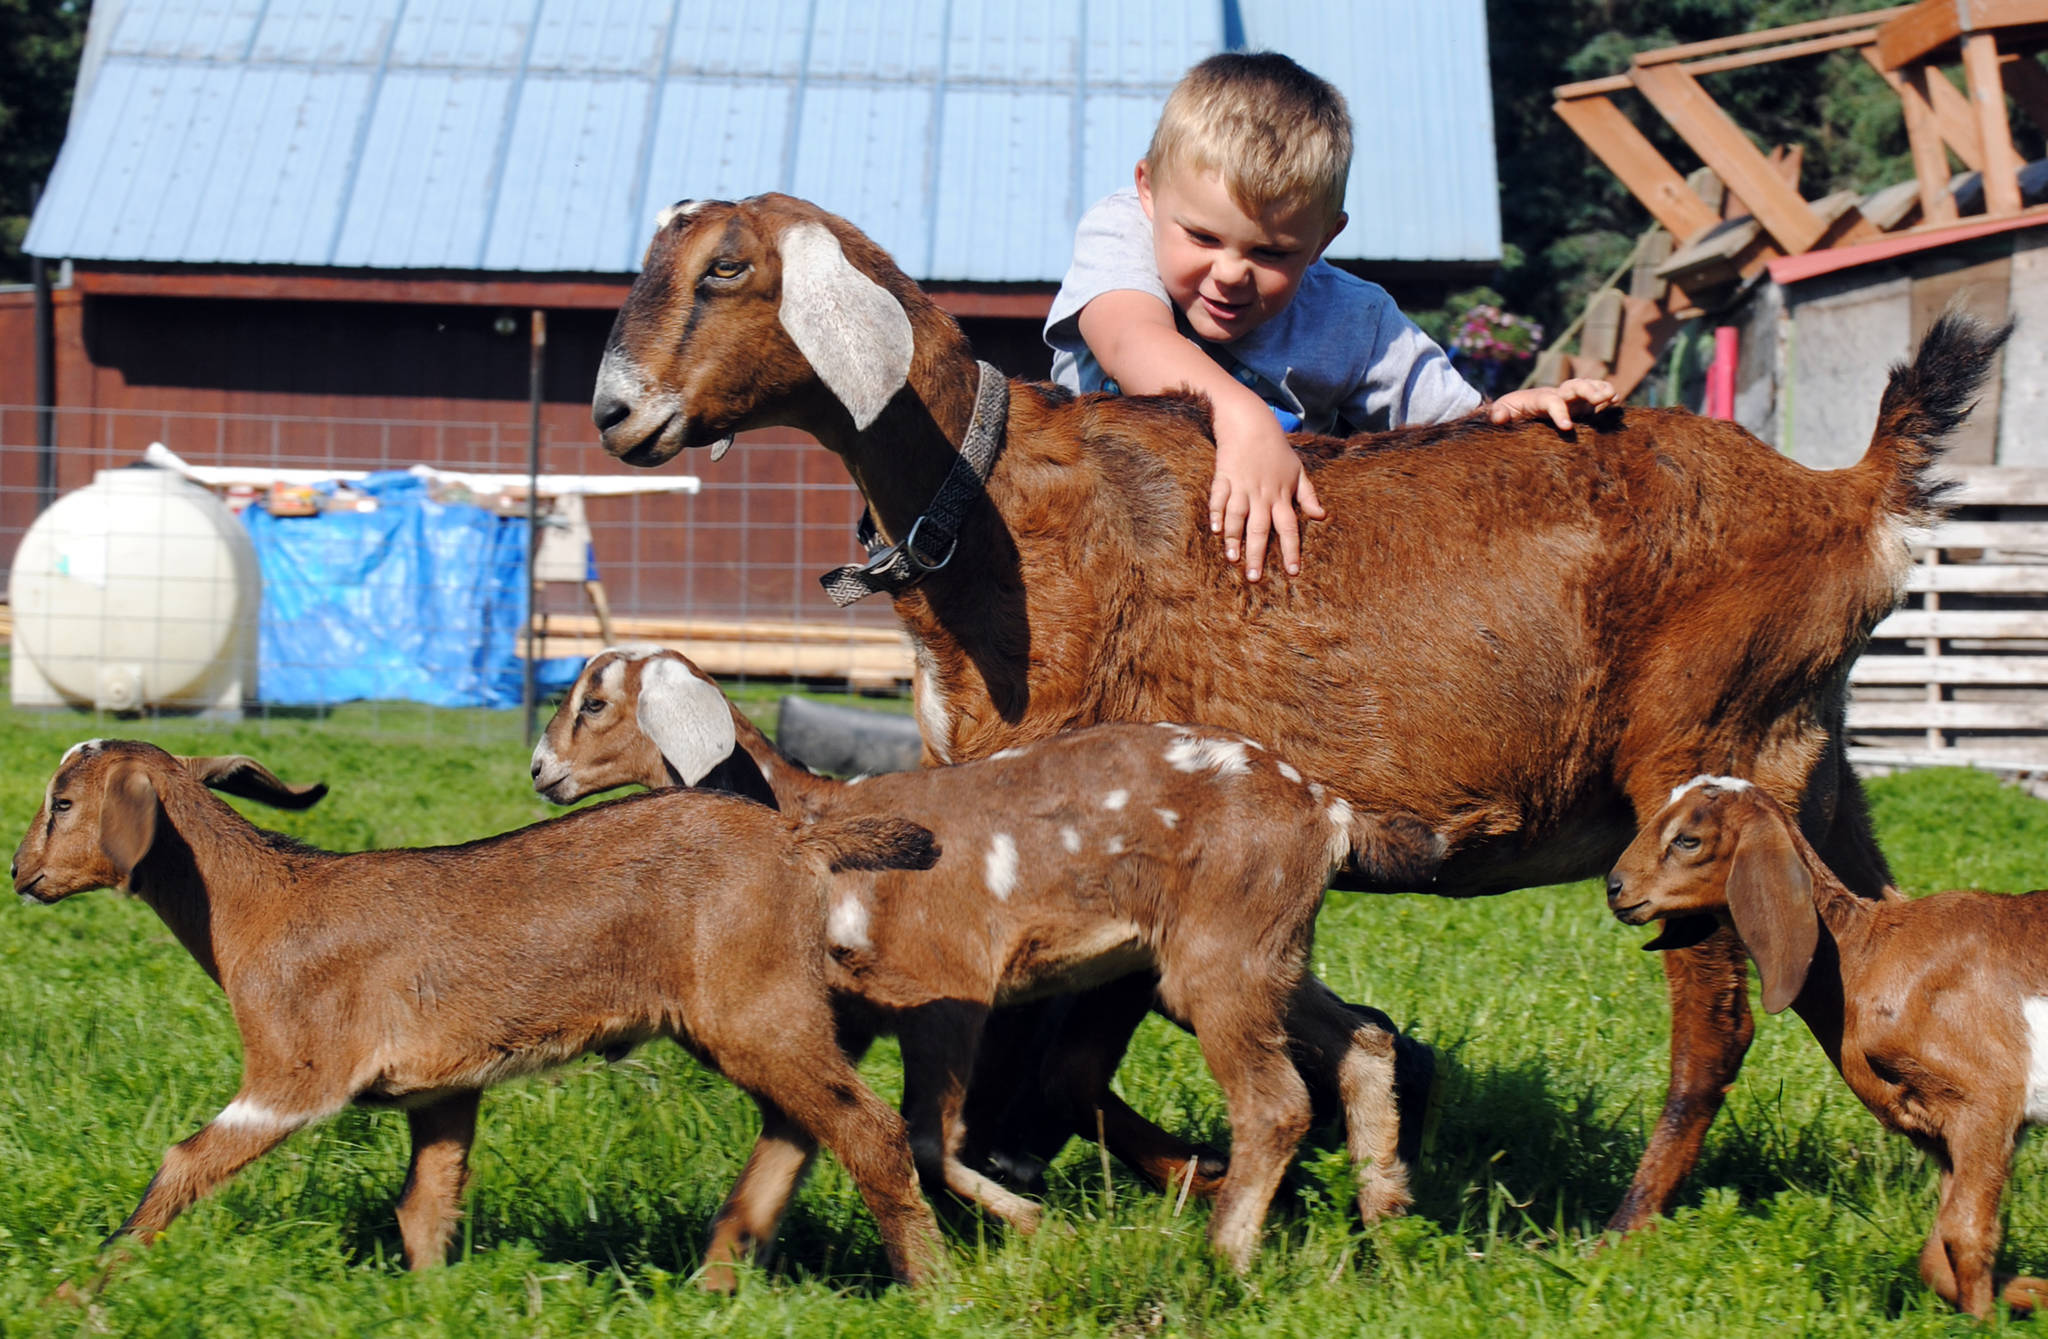 Silas Wendt, 5, plays among the goats at his family’s farm, Karluk Acres, on Wednesday, July 12, 2017 in Kenai, Alaska. (Photo by Kat Sorensen/Peninsula Clarion) 